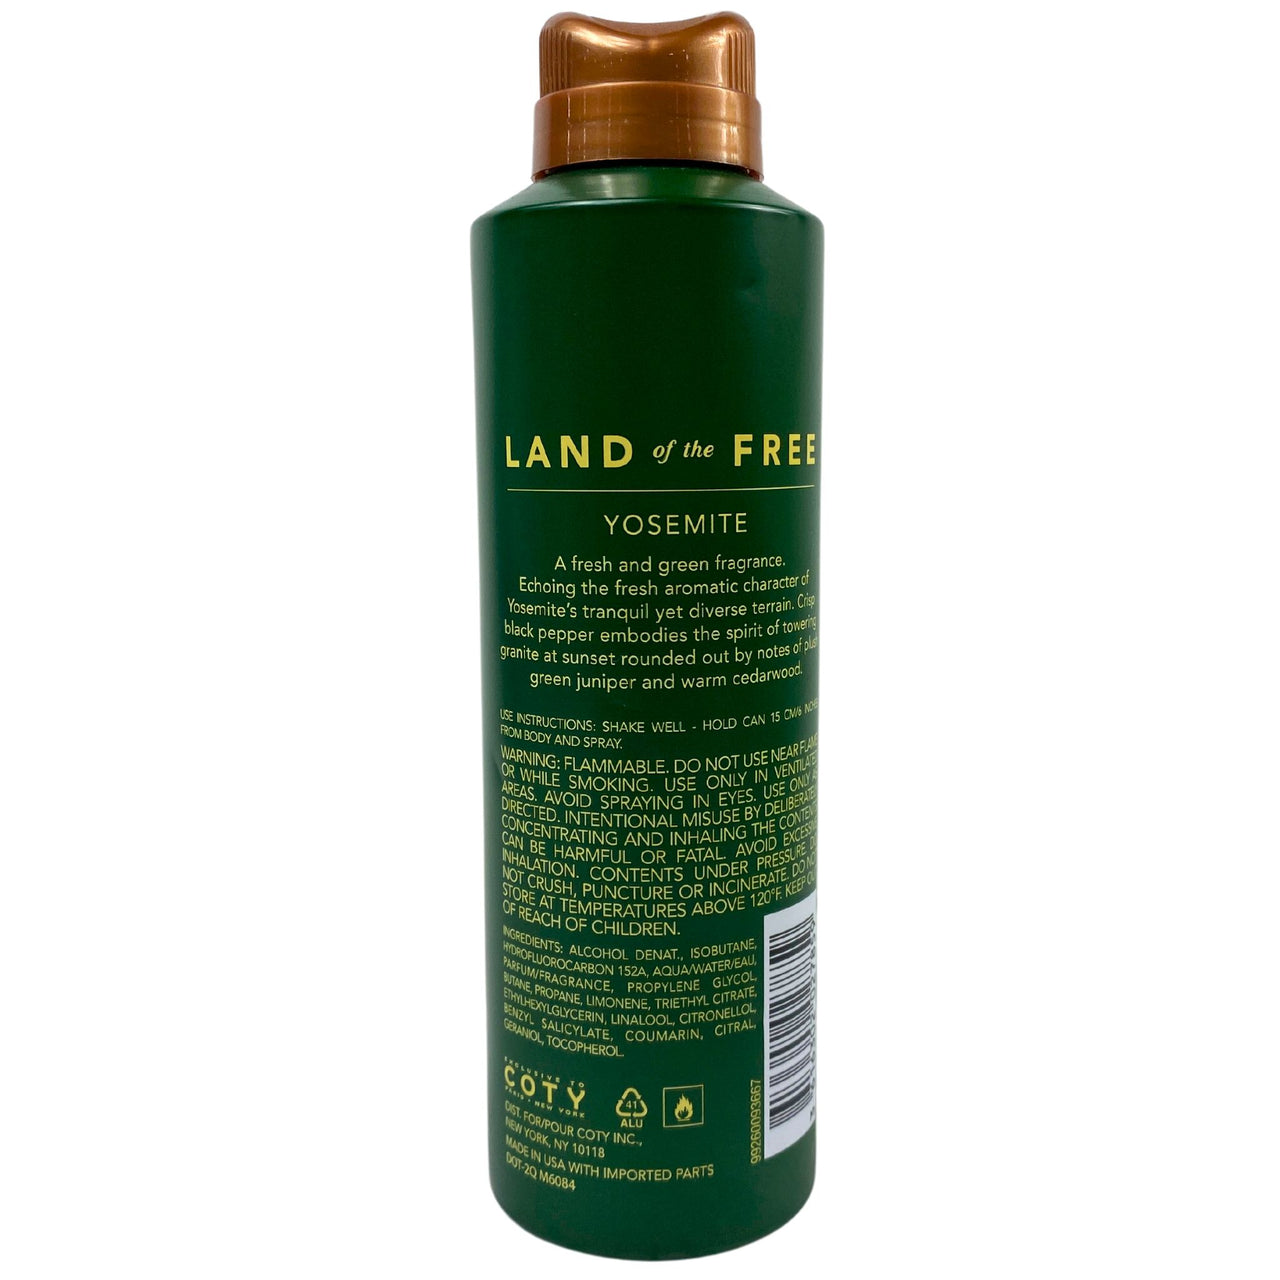 Land Of The Free Yosemite Fresh & Green Deodorizing Body Spray 6ZO